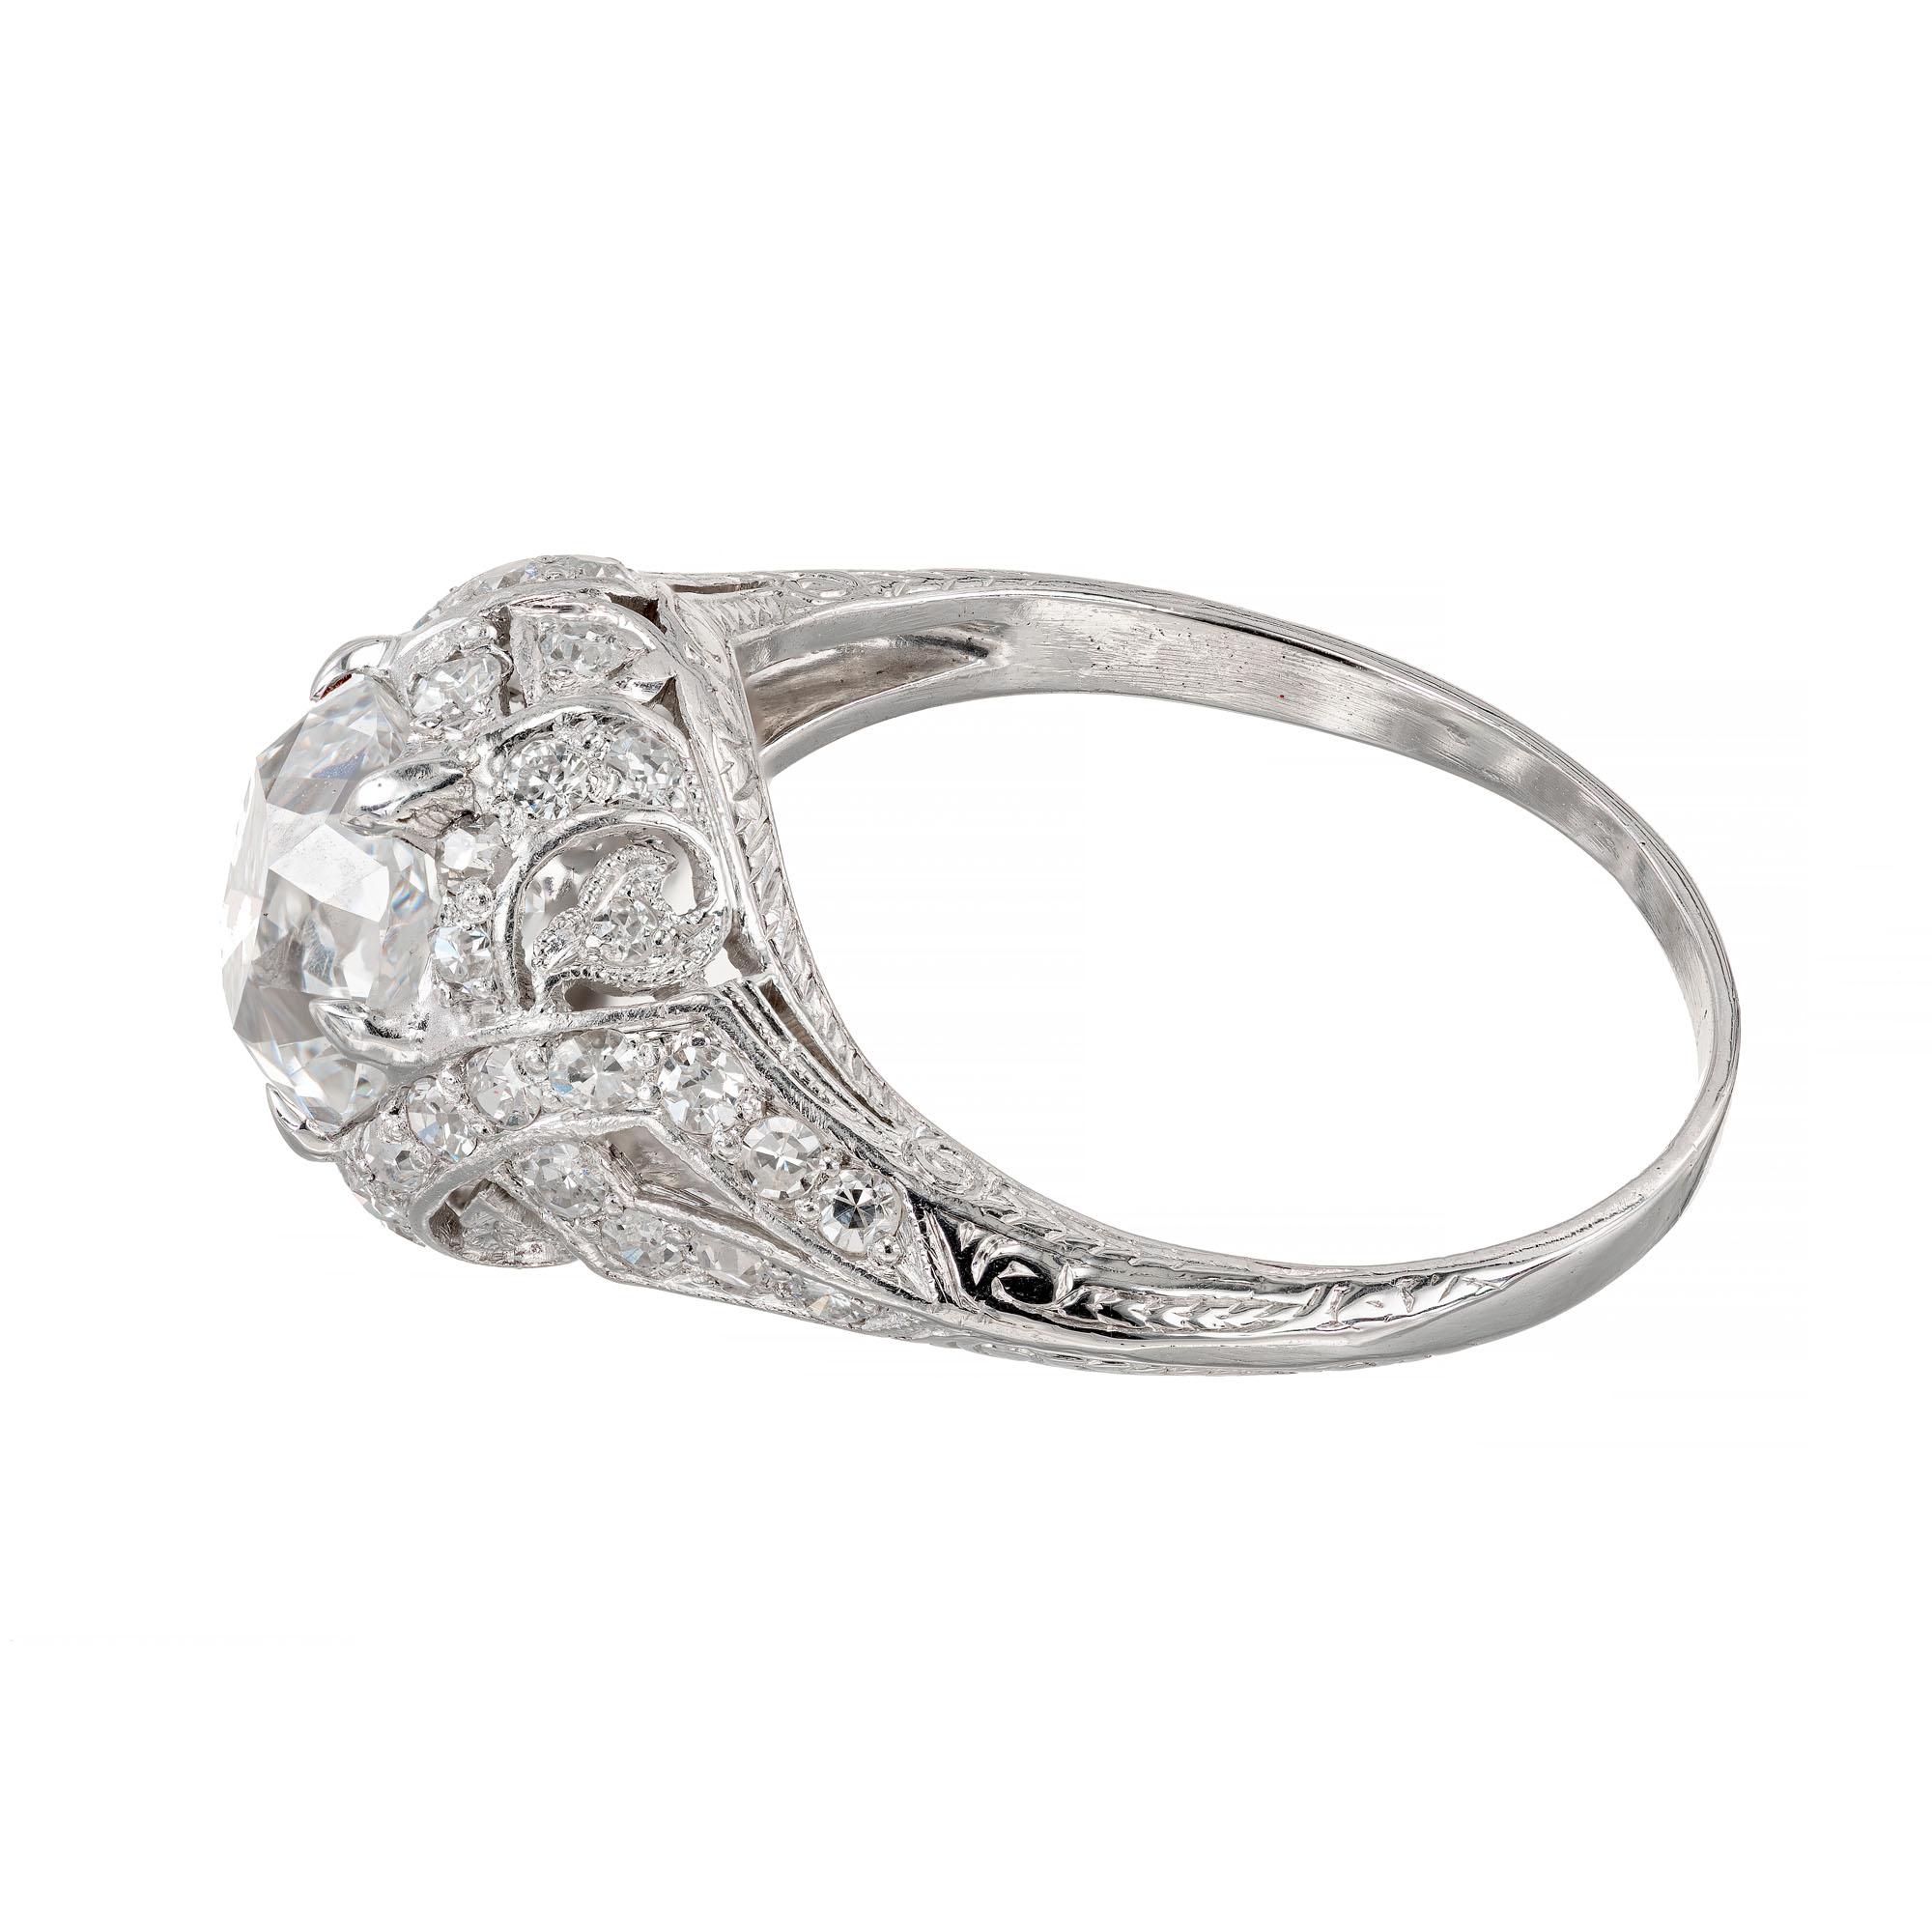 Old European Cut GIA Certified 1.55 Carat Diamond Platinum Engagement Ring For Sale